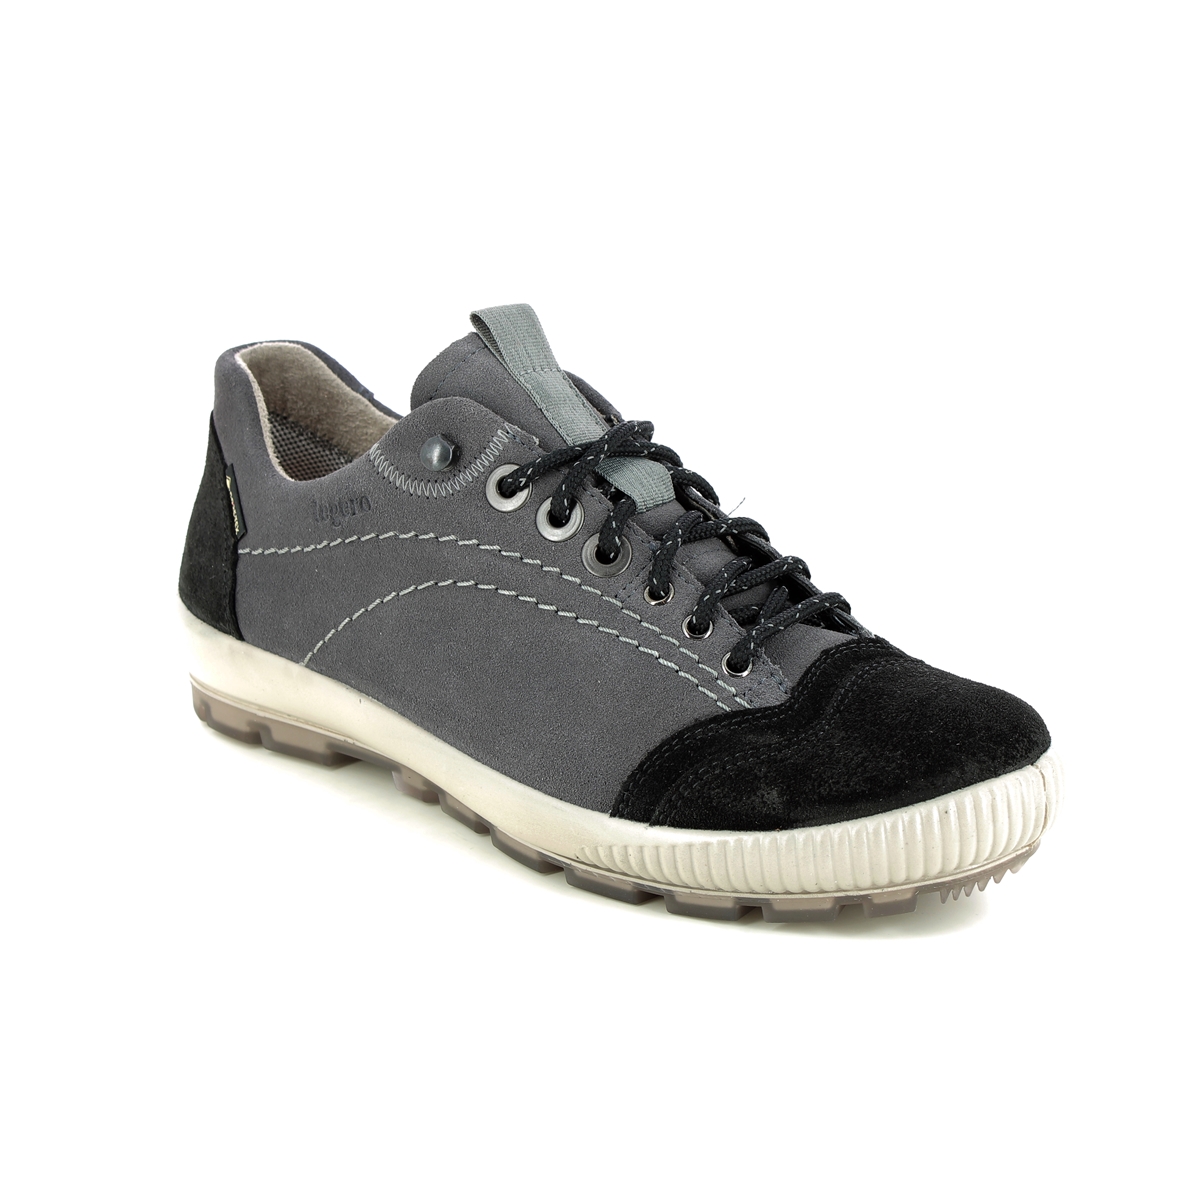 Legero Tanaro Trek Gtx Grey Womens Walking Shoes 2000122-2400 In Size 6 In Plain Grey